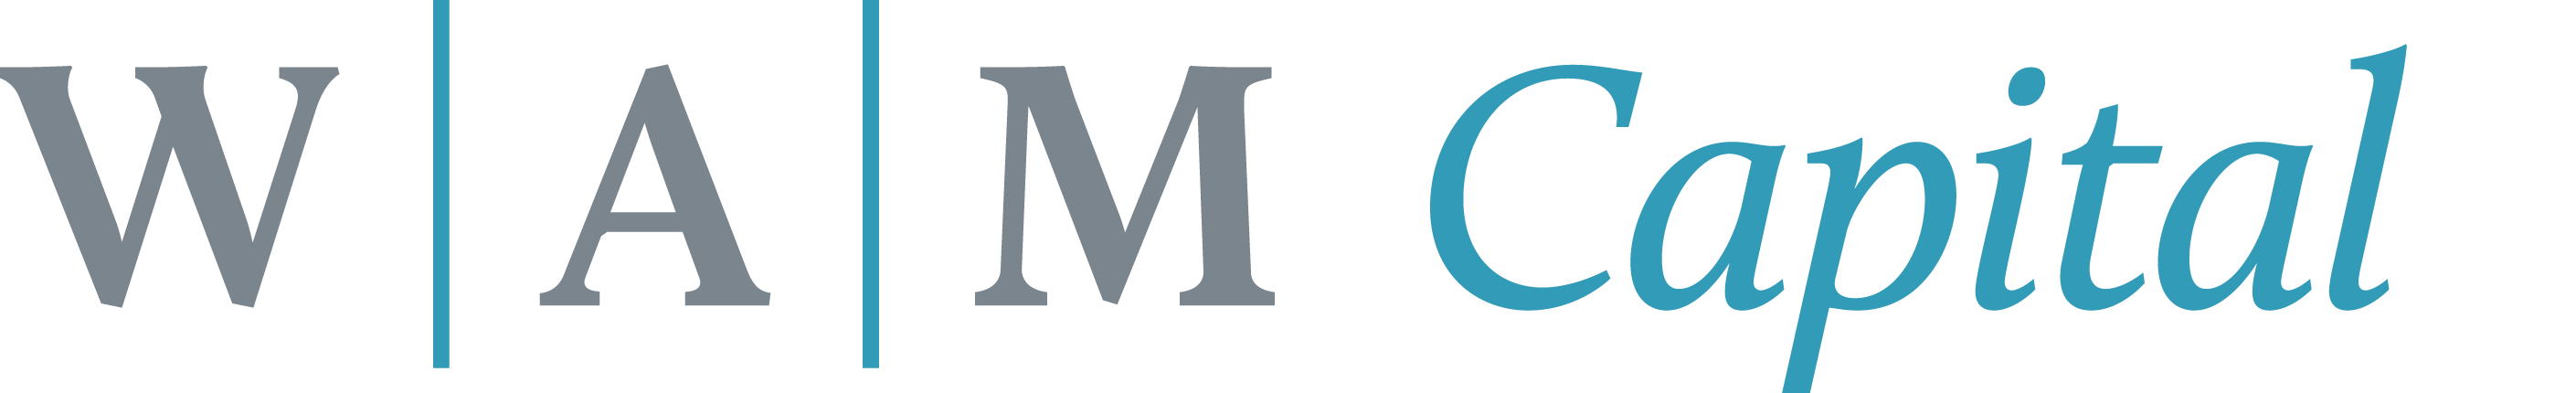 WAM Global Limited Logo